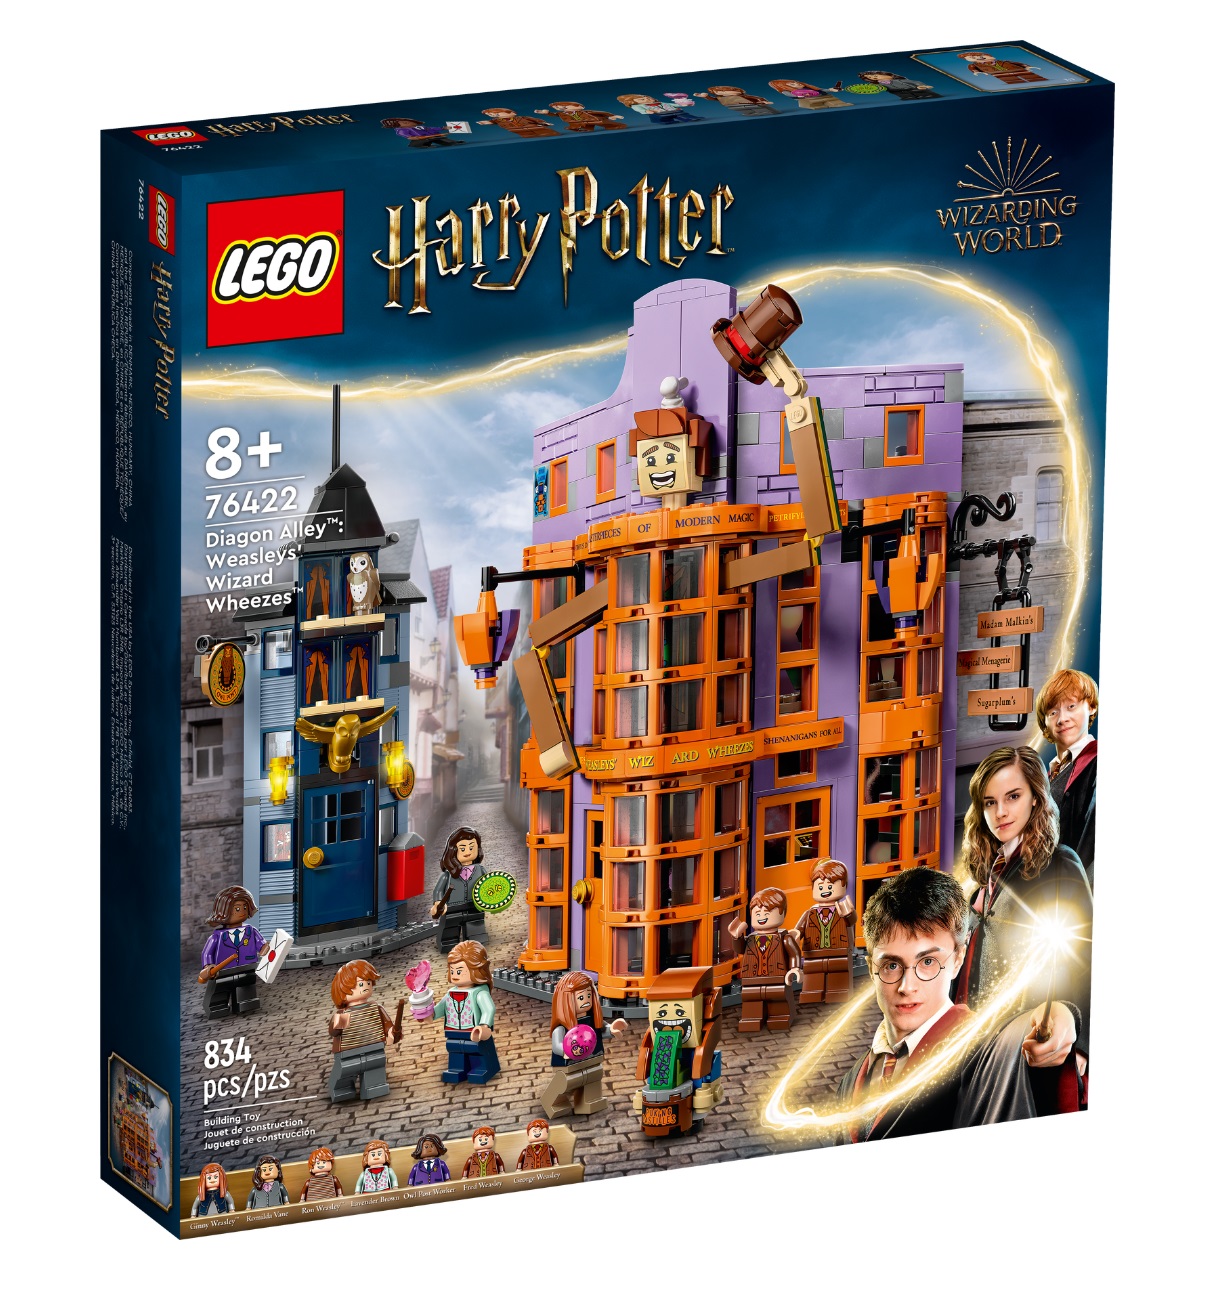 LEGO HARRY POTTER COLLECTION (SWITCH) preço mais barato: 10,79€